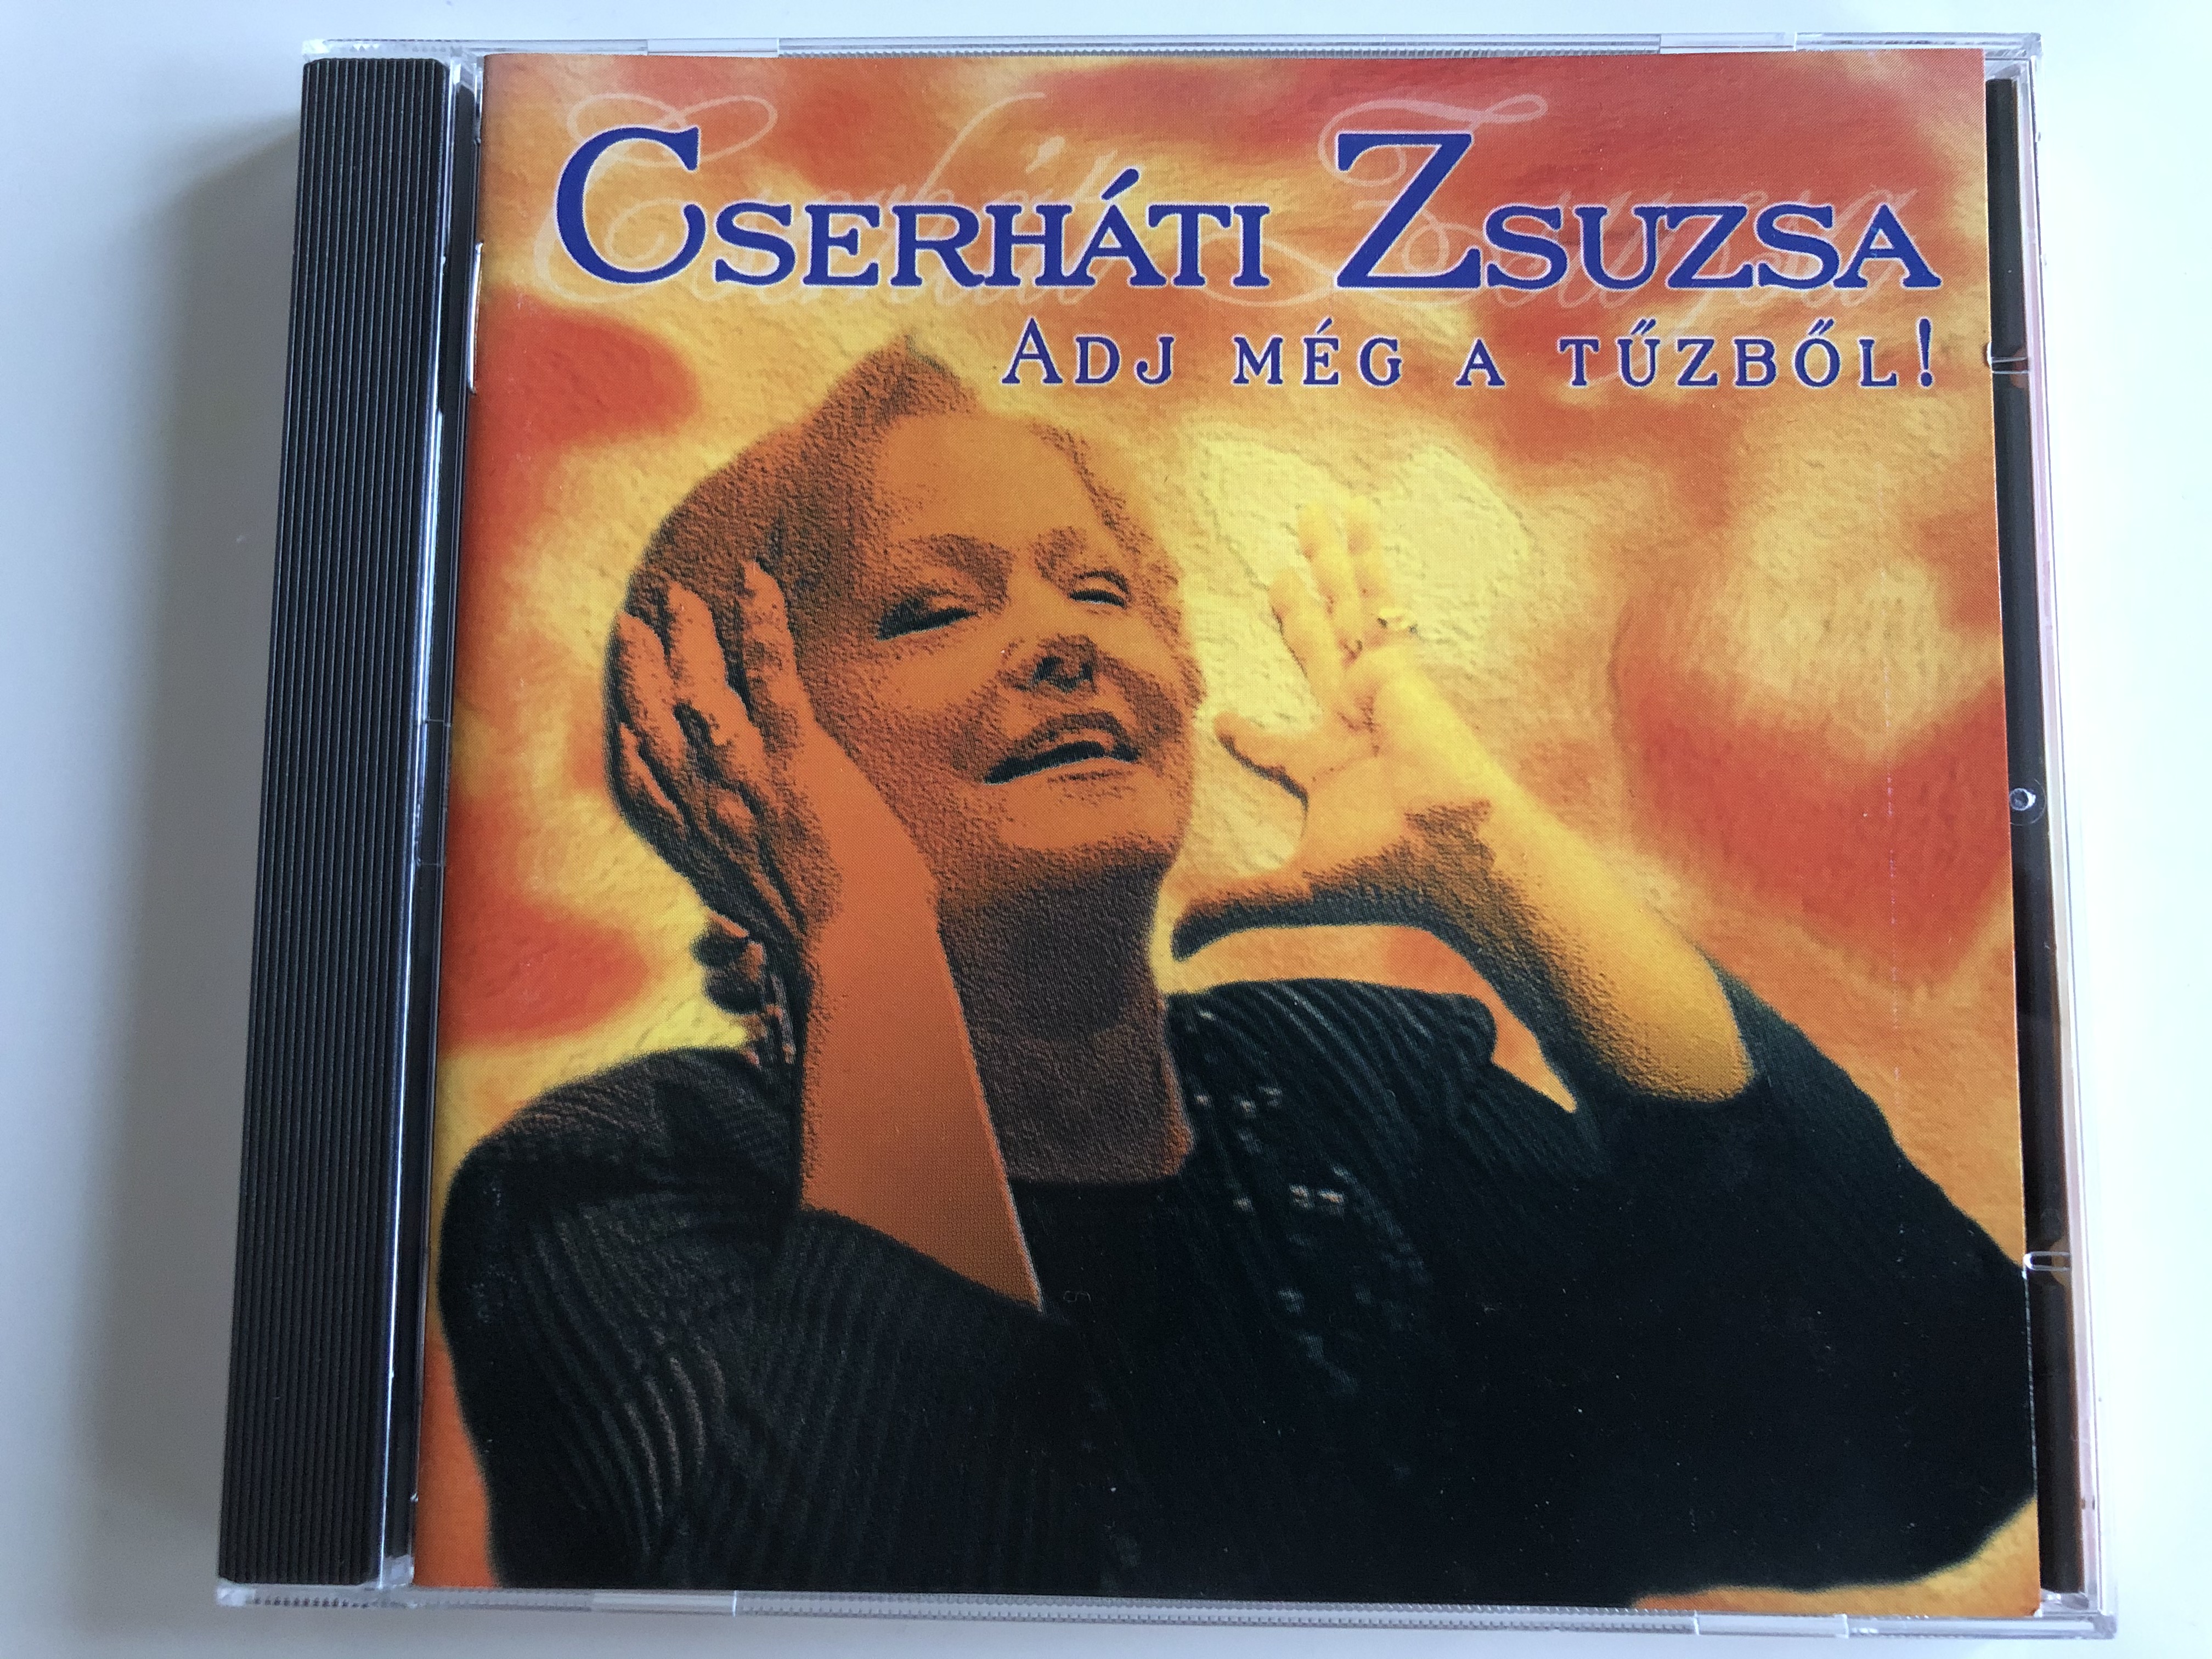 cserh-ti-zsuzsa-adj-m-g-a-t-zb-l-bmg-hungary-audio-cd-1999-74321-665412-1-.jpg